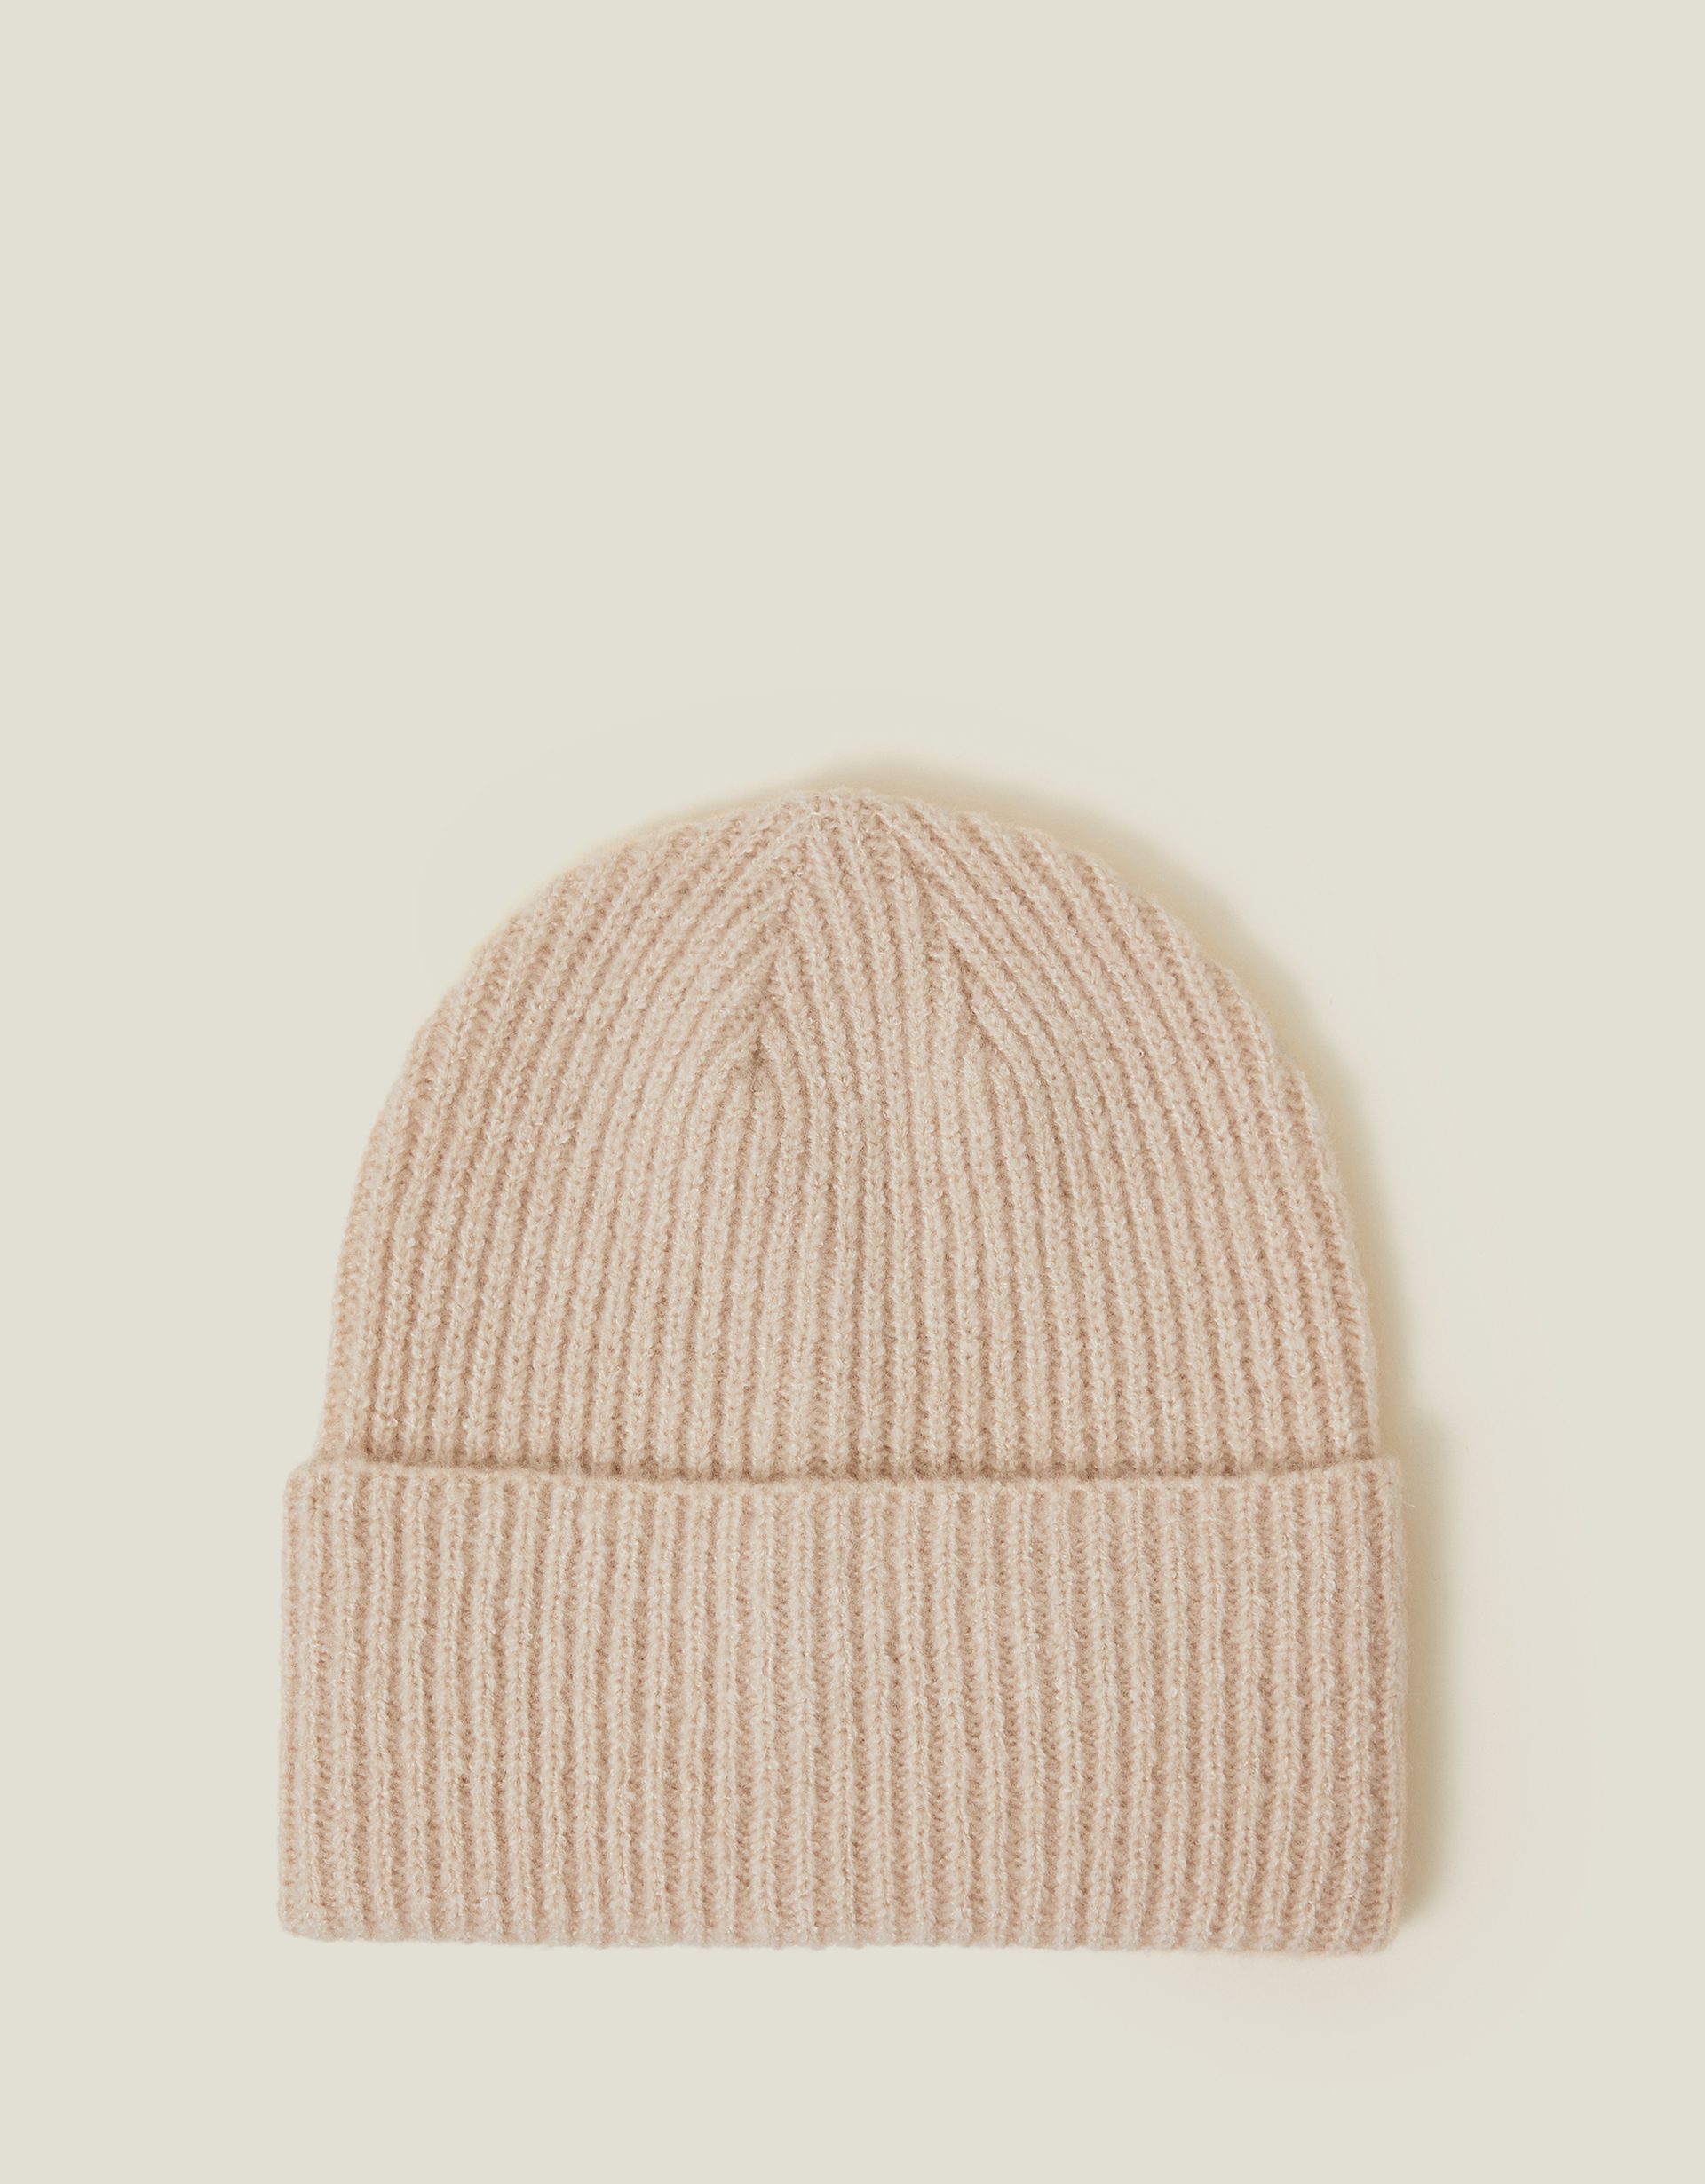 Accessorize Soho Knit Beanie Hat Natural, Size: 22x8cm